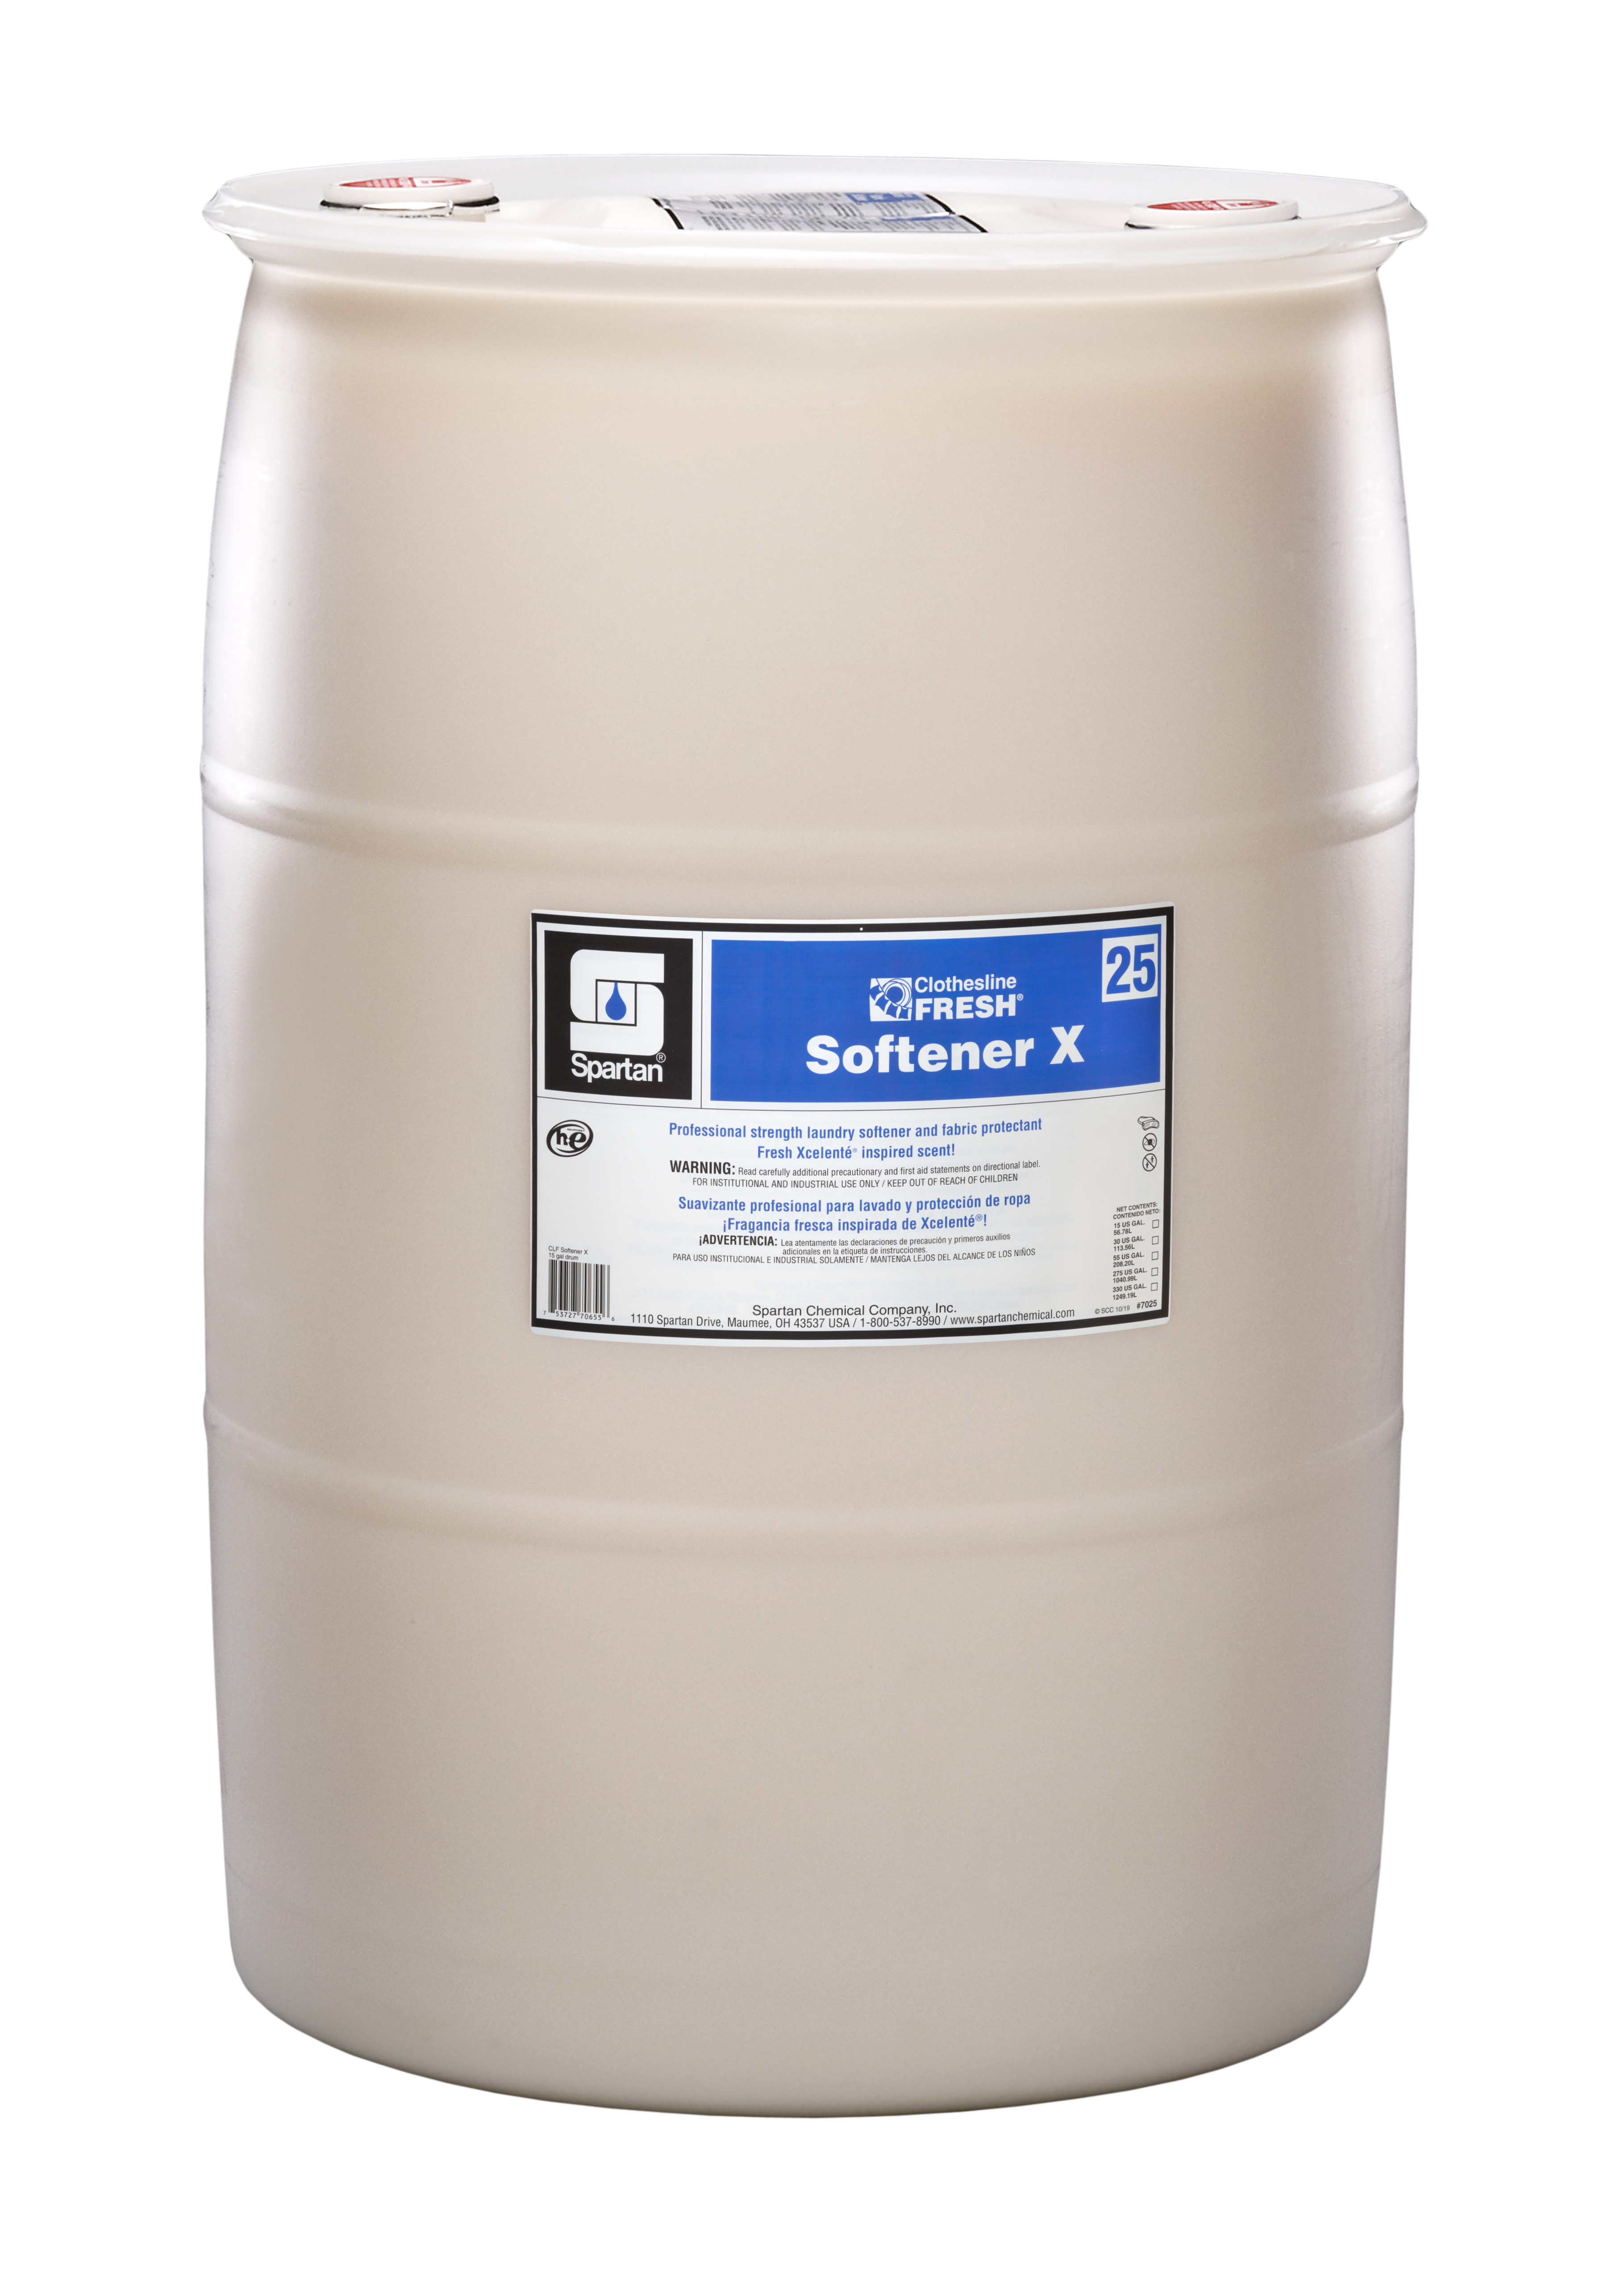 Spartan Chemical Company Clothesline Fresh Softener X 25, 55 GAL DRUM